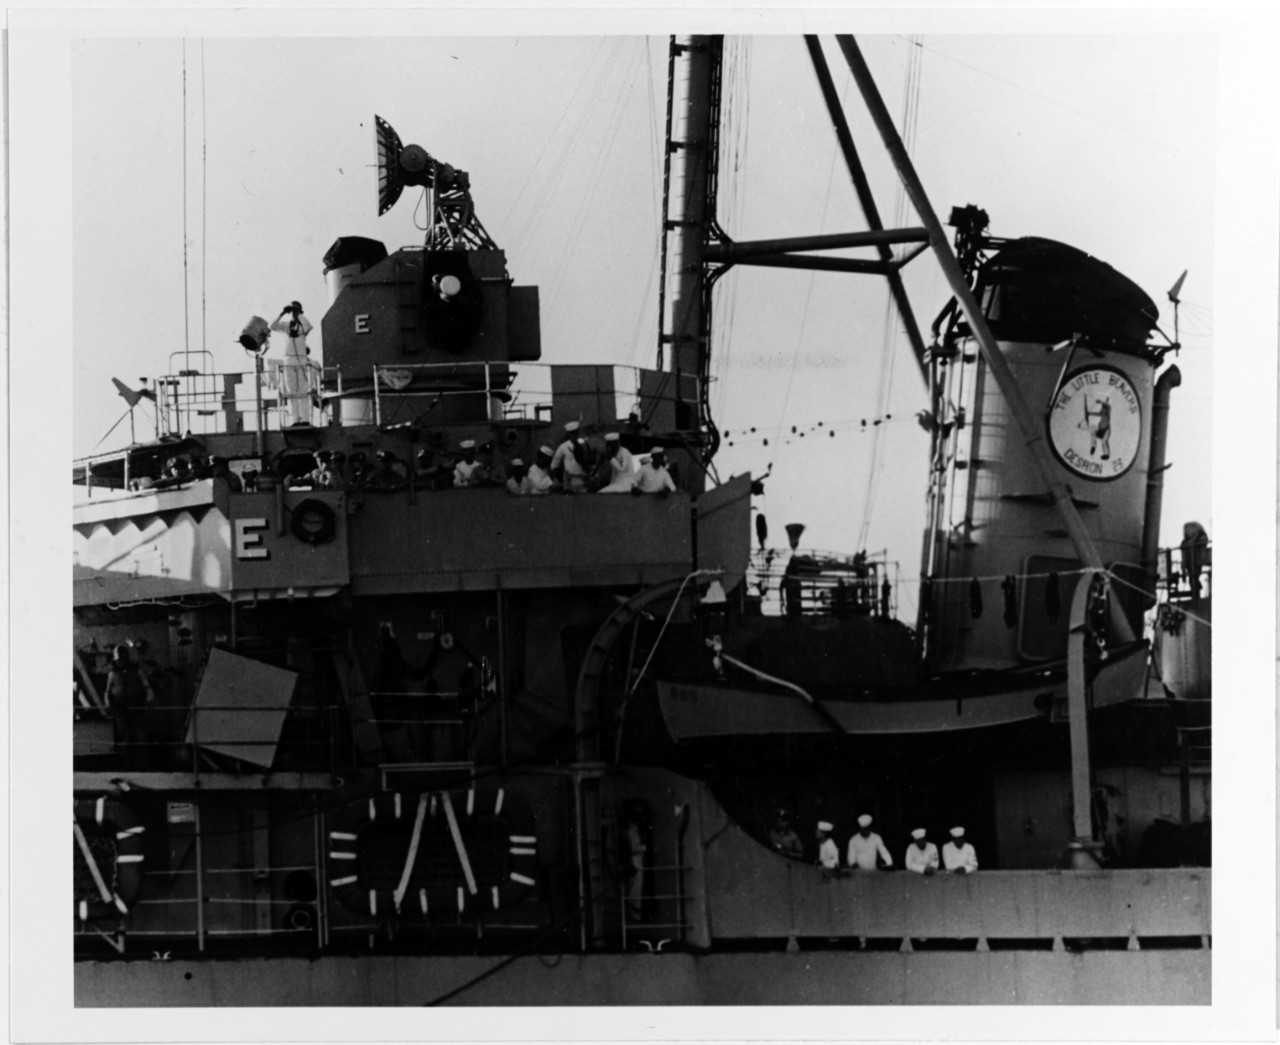 USS PICKING (DD-685)